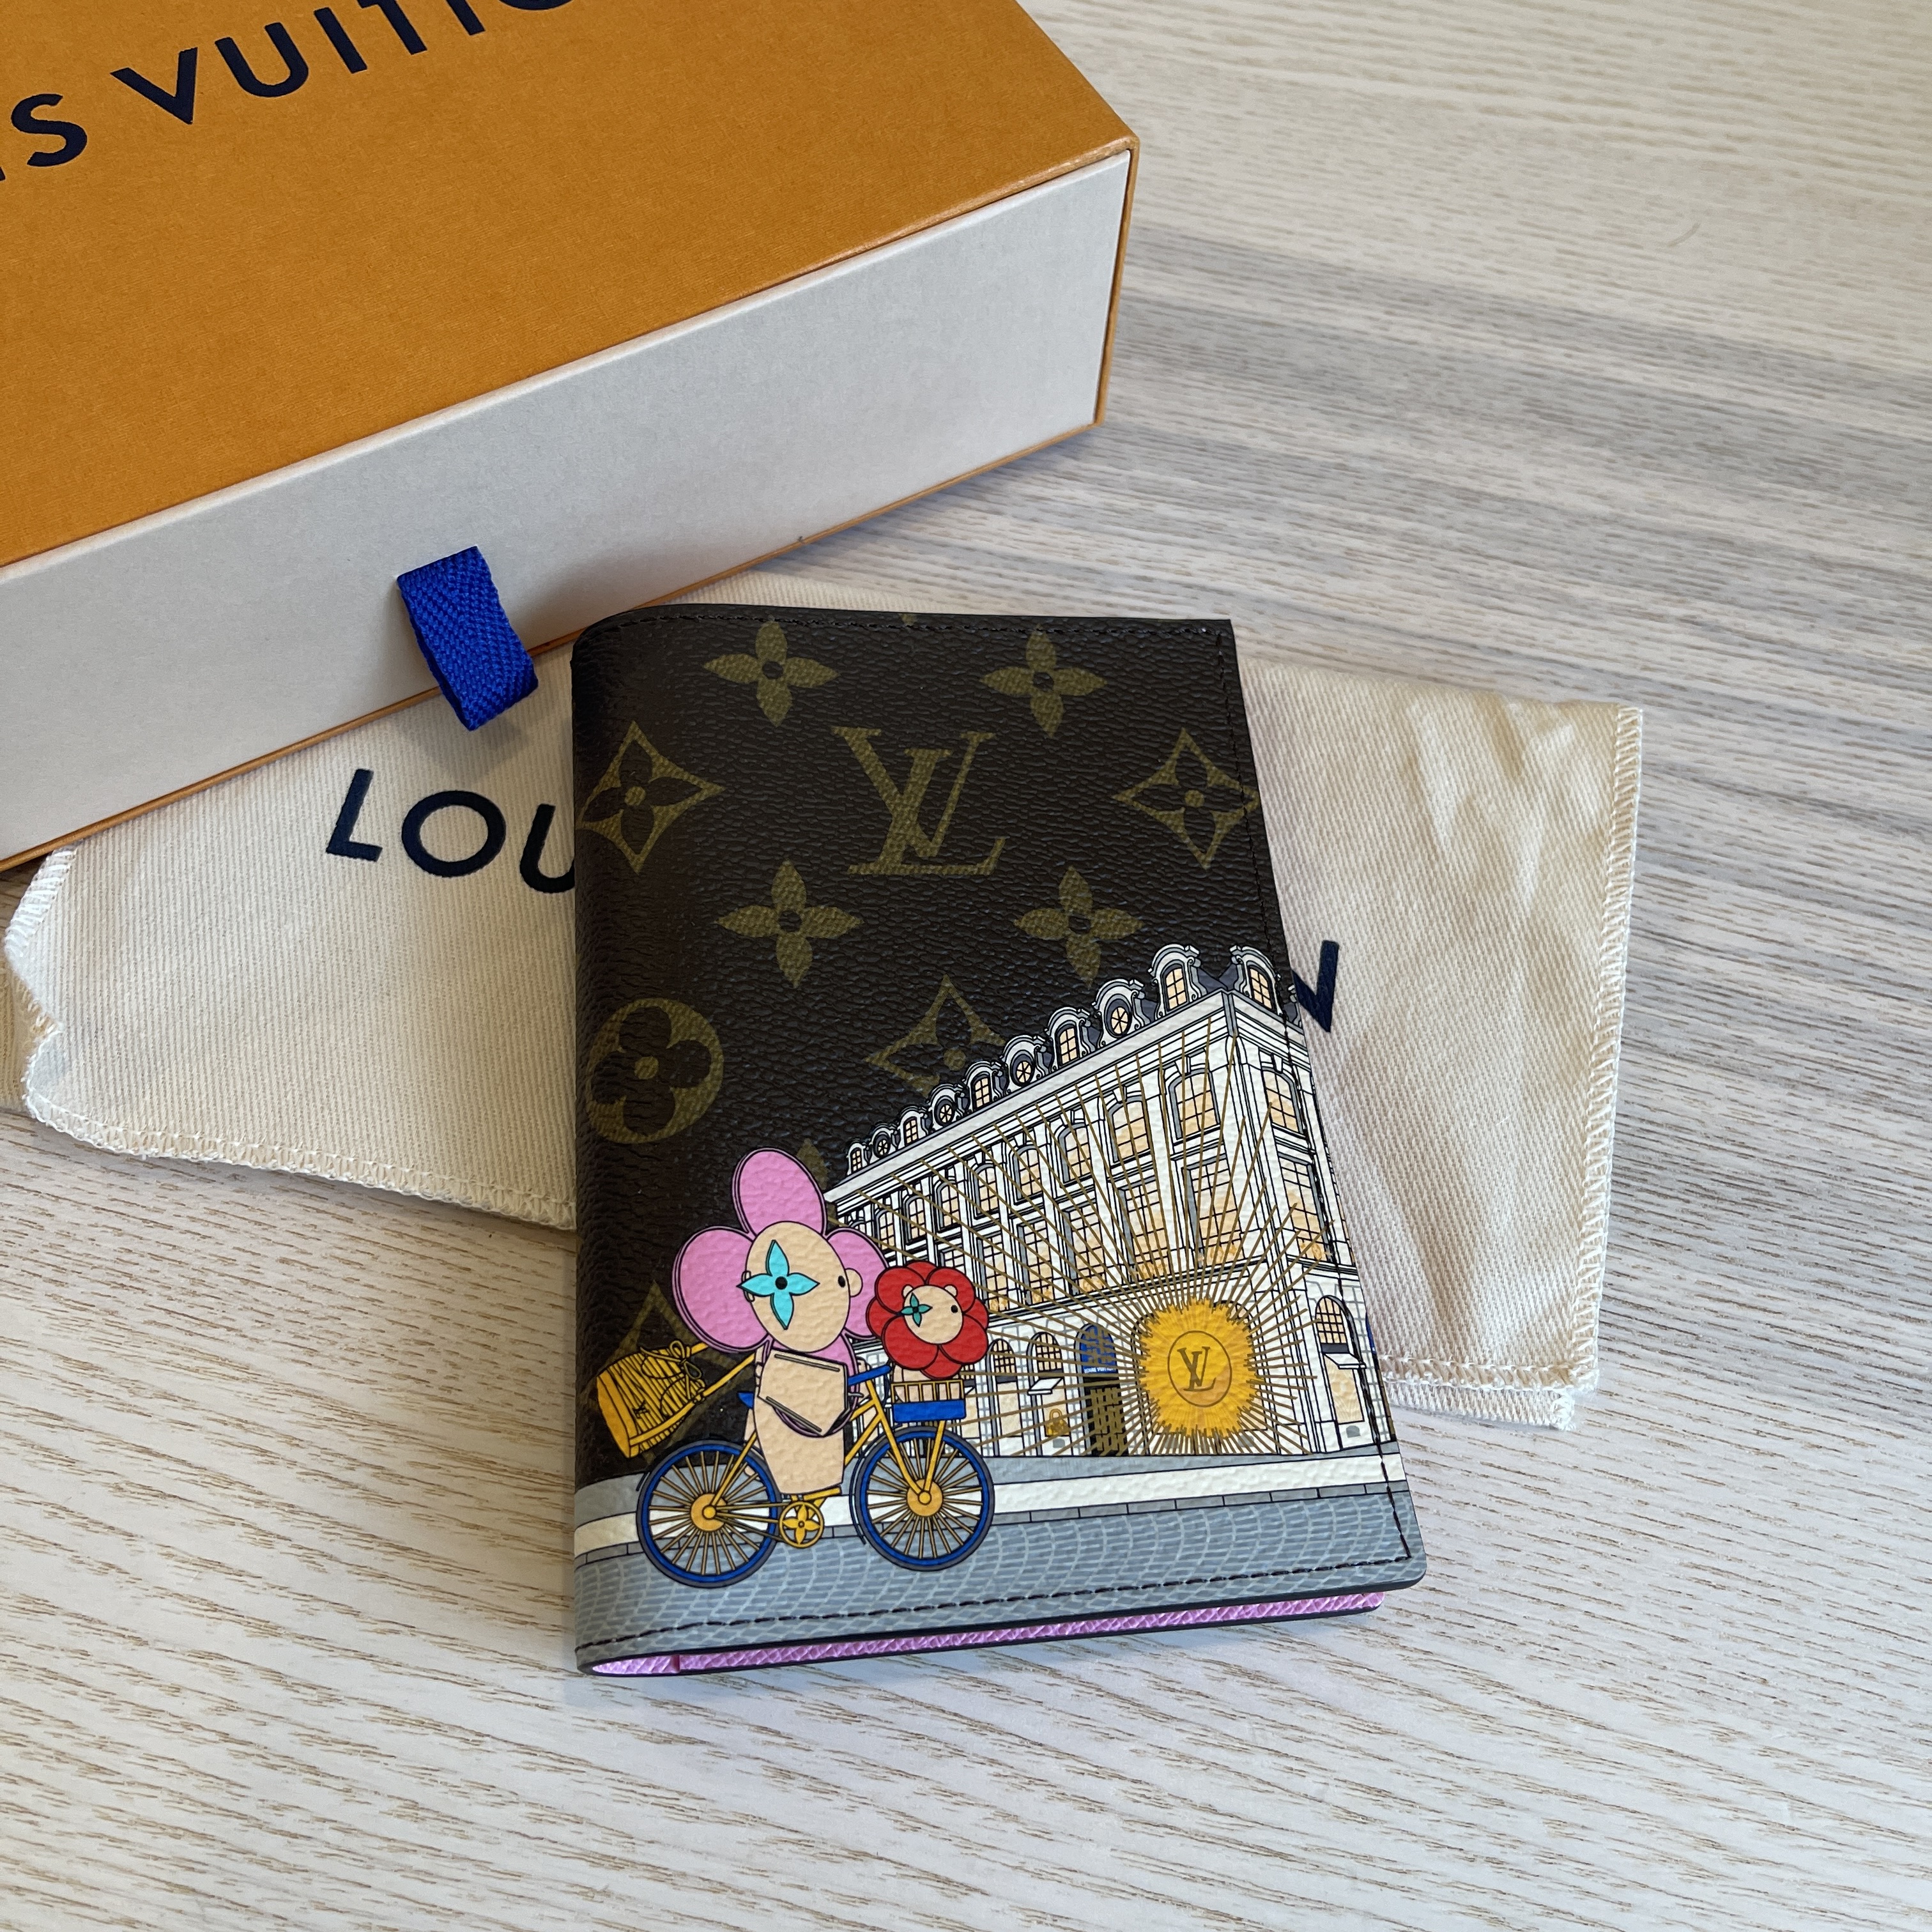 Louis Vuitton Monogram Passport Cover Christmas Animation 2022